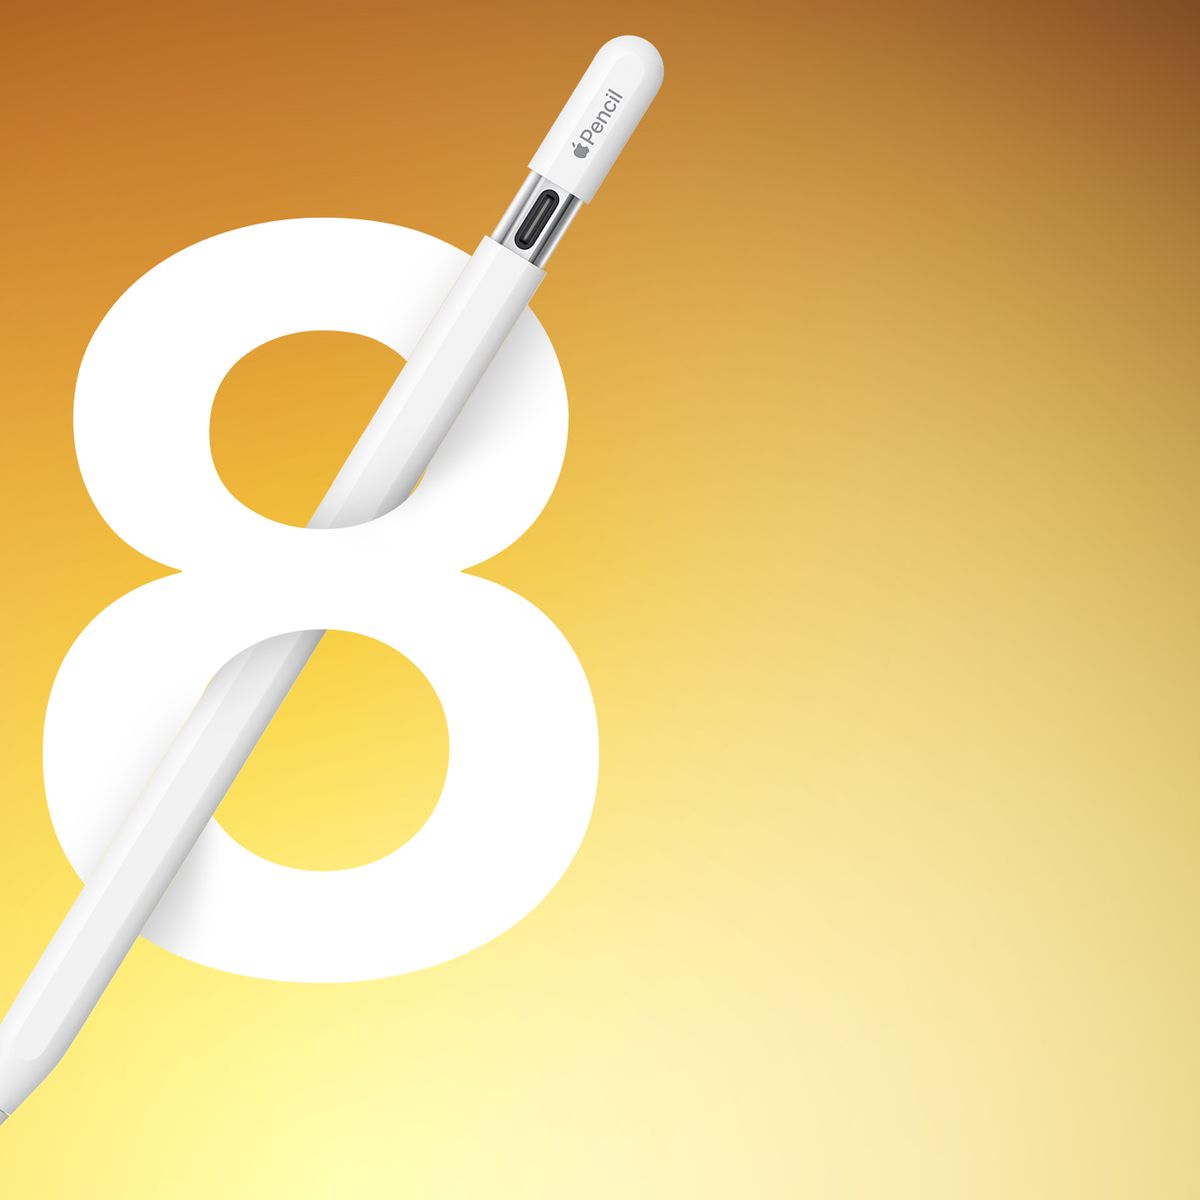 Apple Pencil 3: Everything We Know - MacRumors